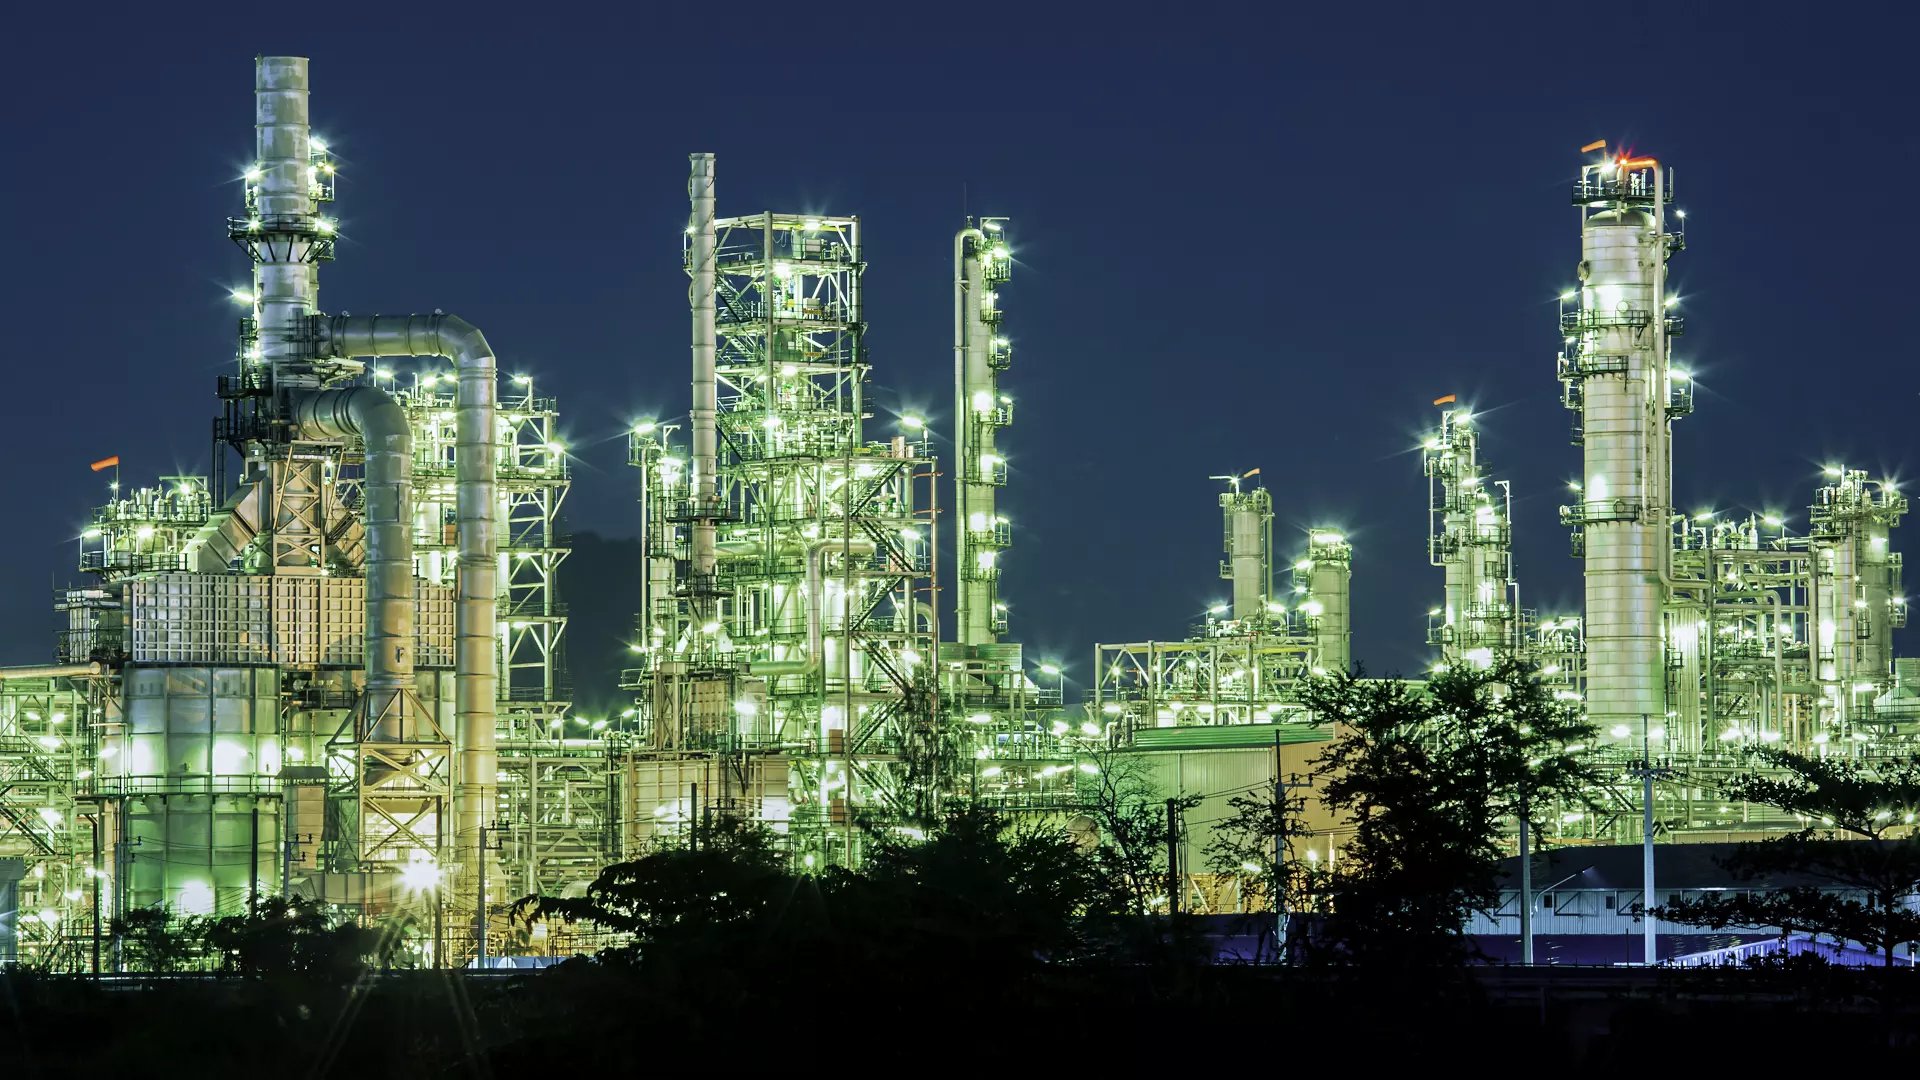 twilight-scene-tank-oil-refinery-plant-tower-column-petrochemistry-industry-site-construction